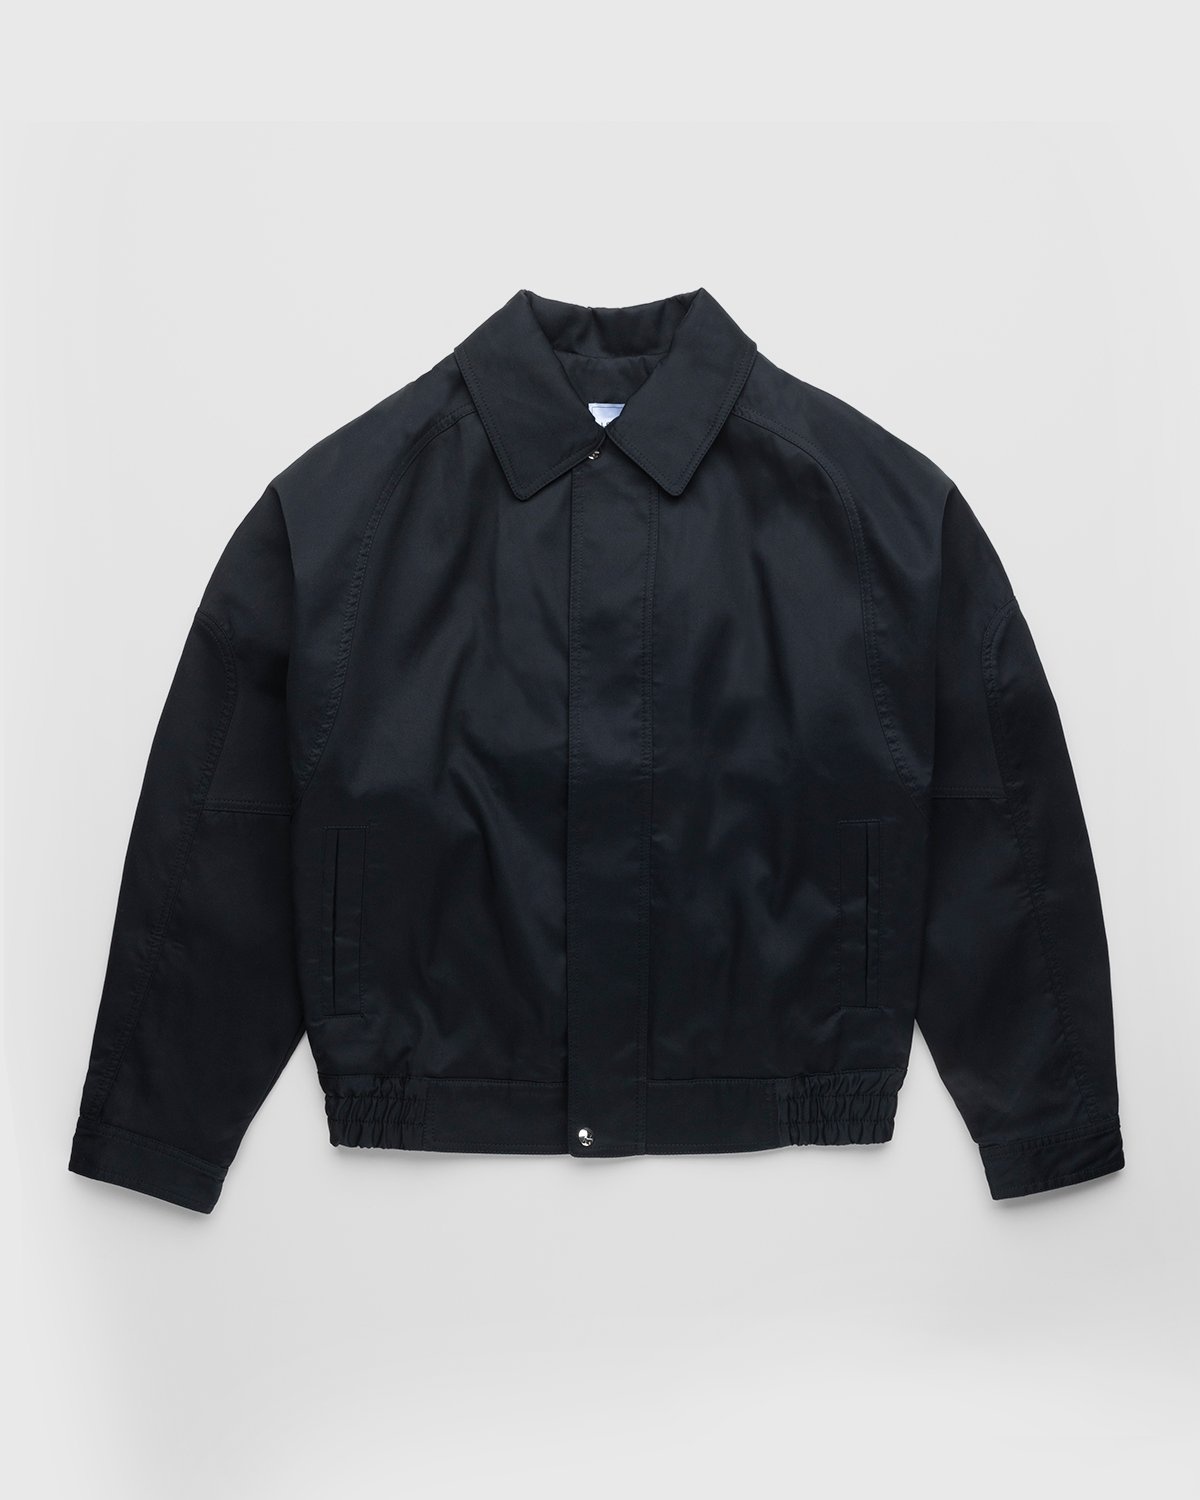 Lourdes New York – Backless Jacket Black - Jackets - Black - Image 1